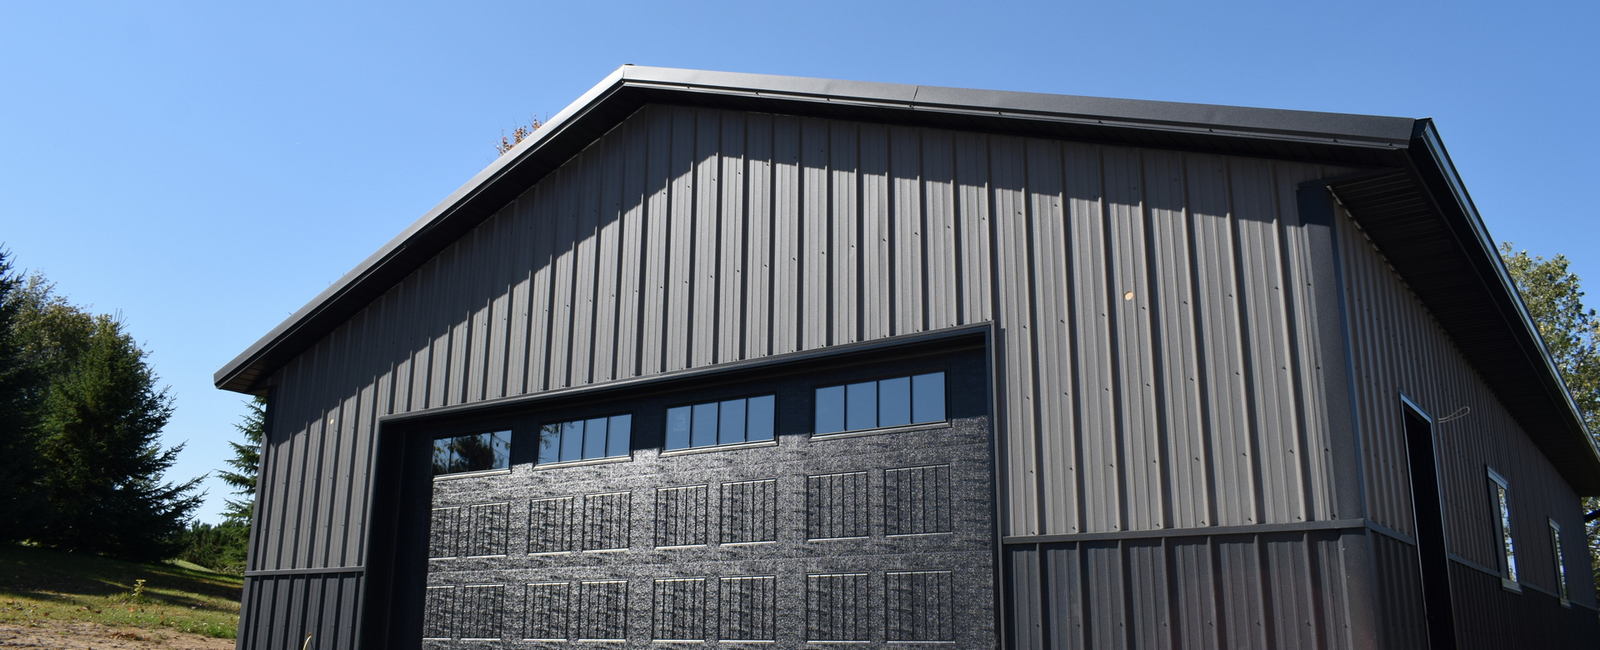 Steel Roofing Siding Panels All, Corrugated Metal Panels Menards